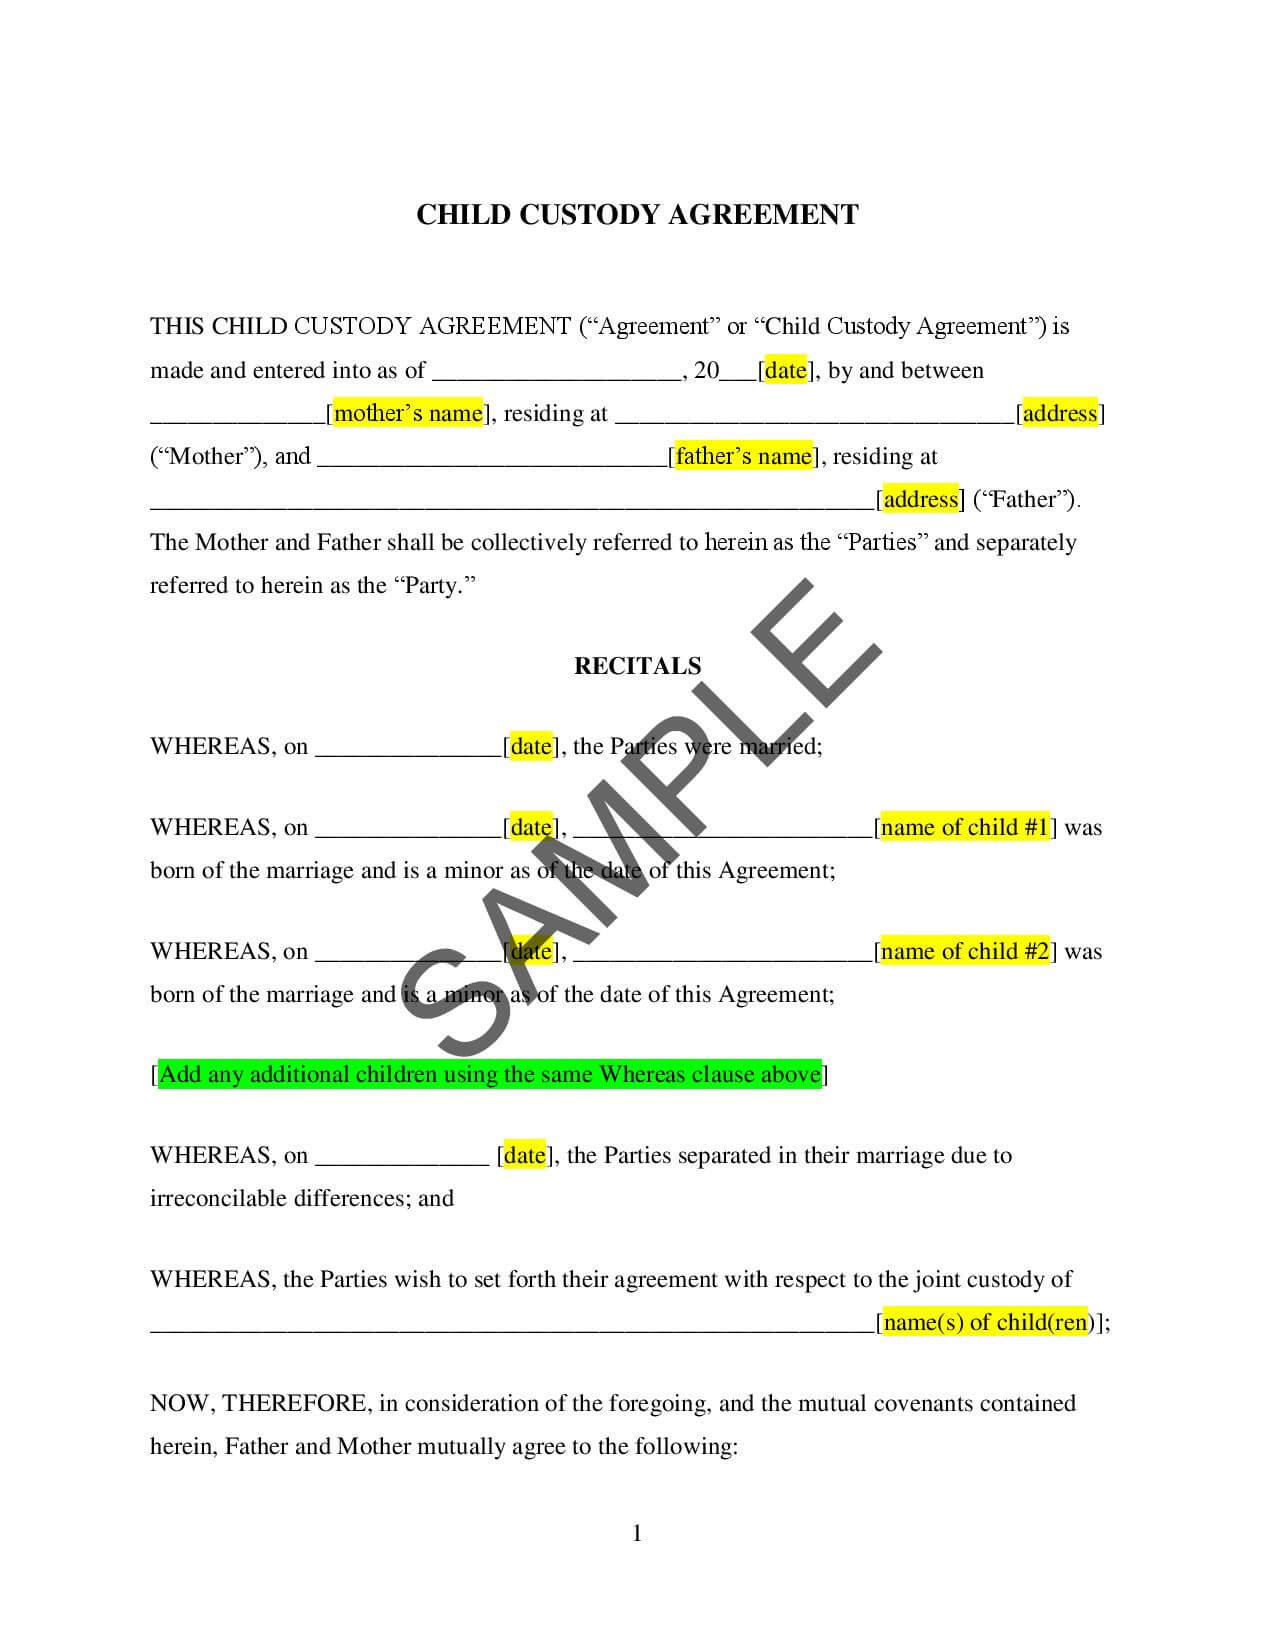 Sample Of Child Custody Agreement Child Custody Agreement